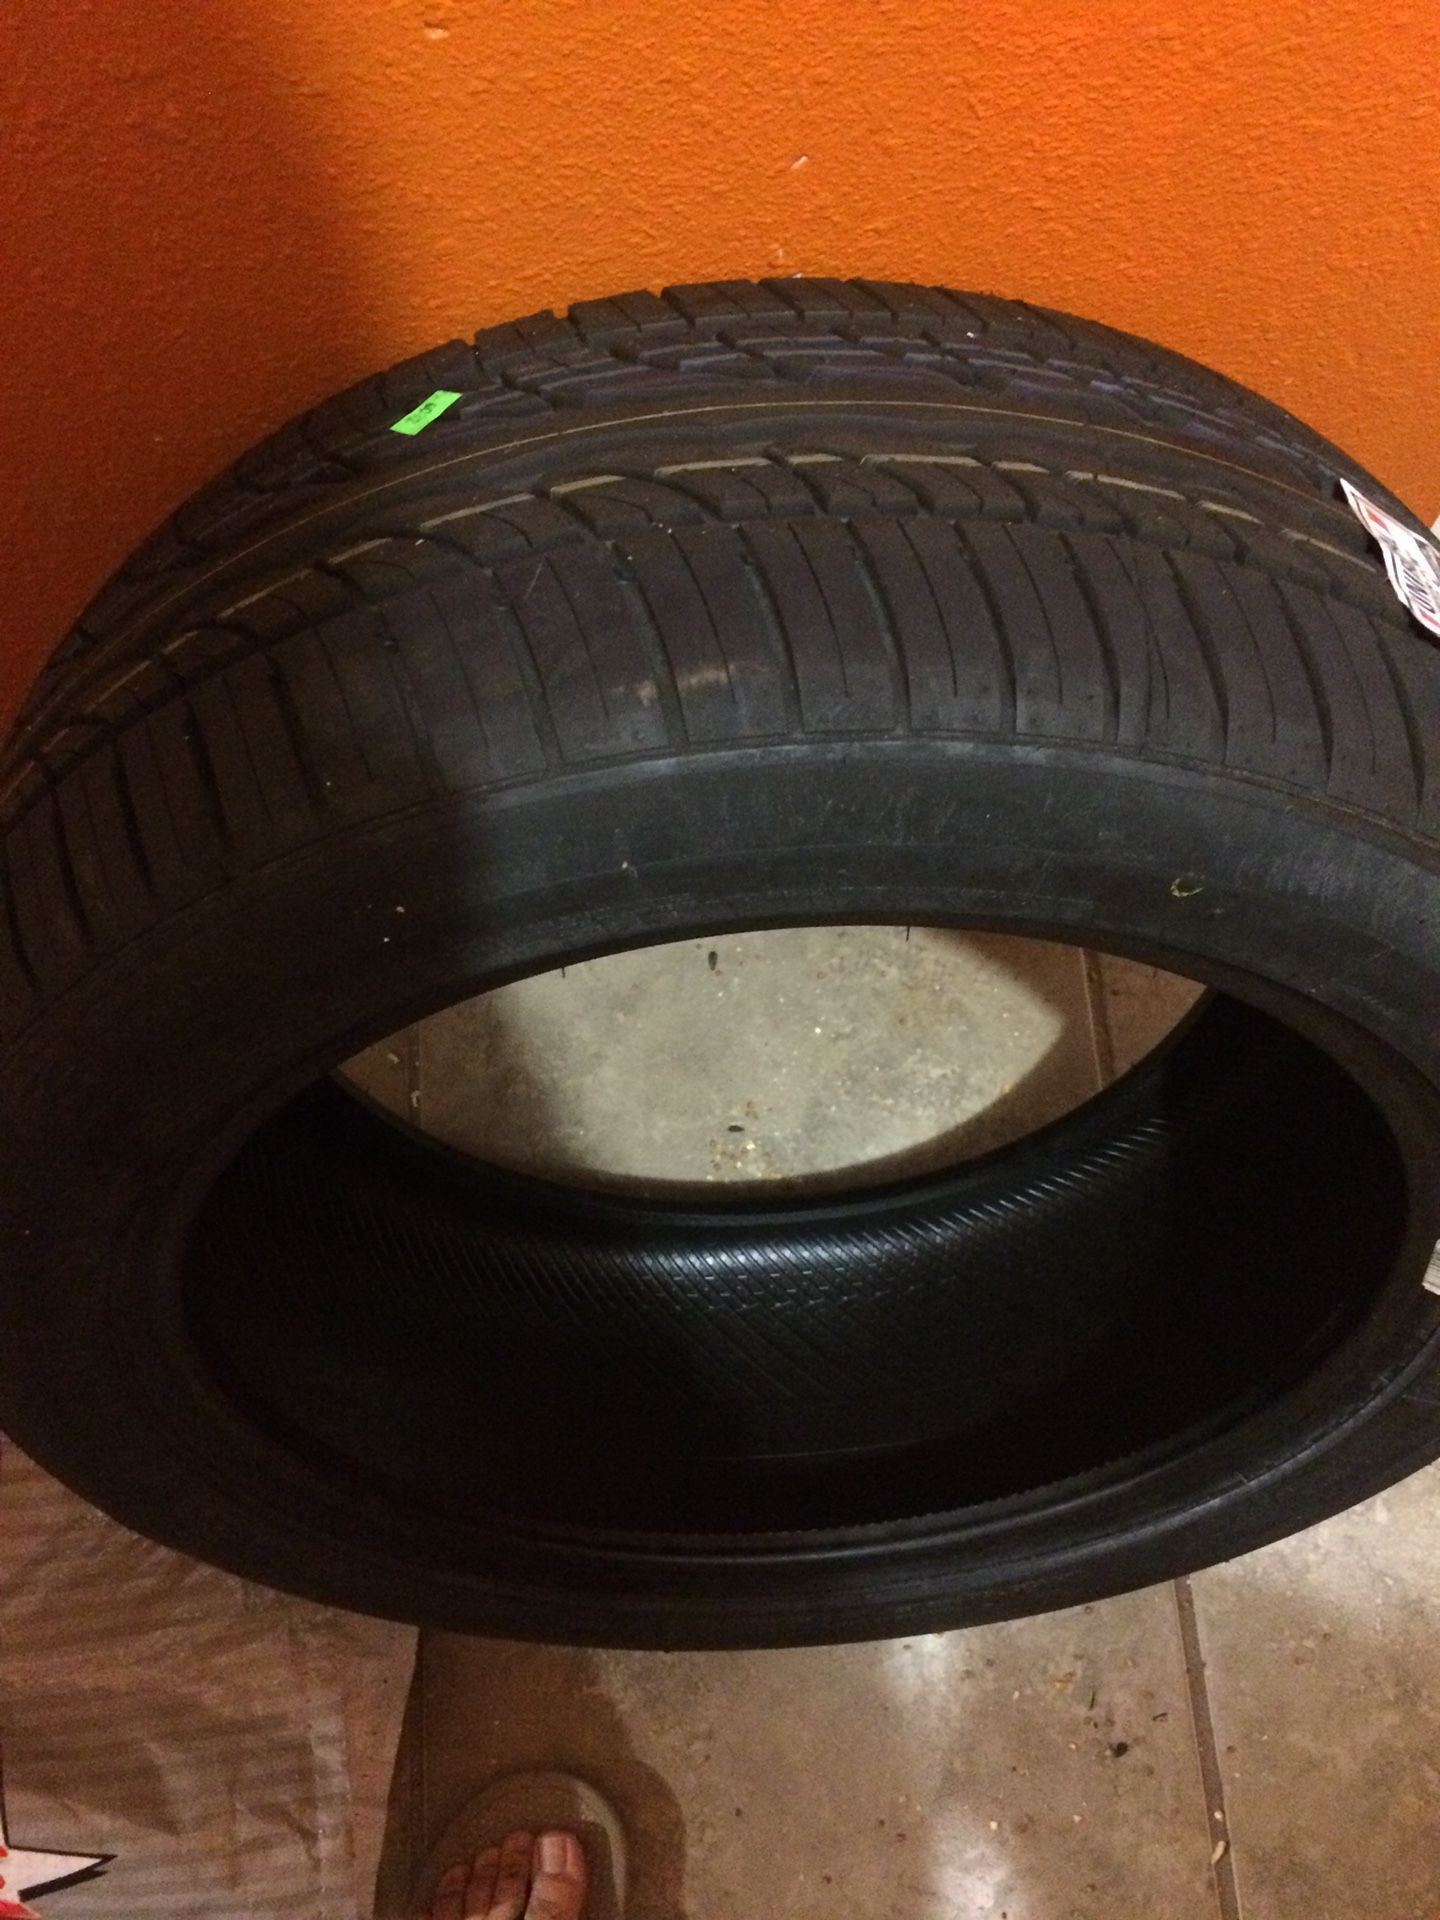 New Uniroyal tire